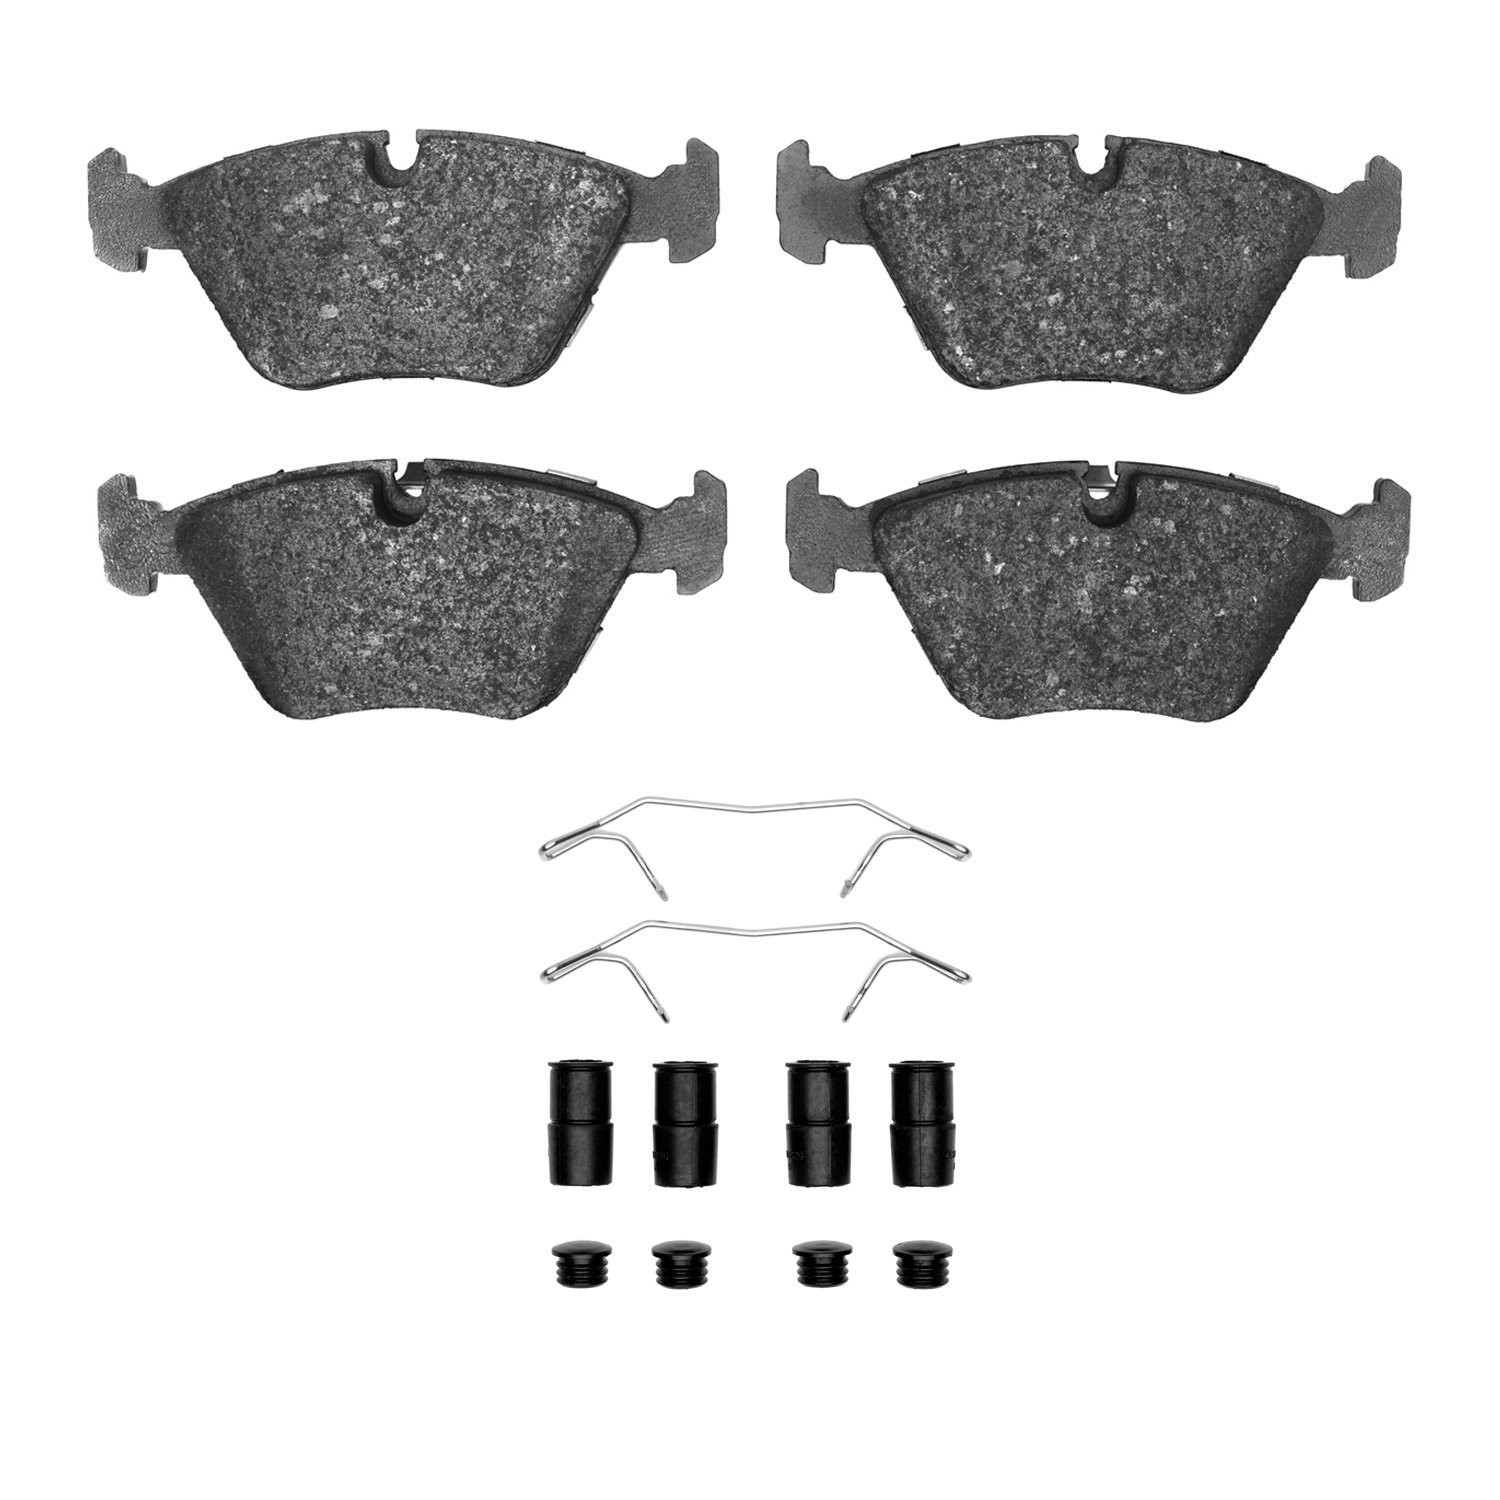 1600-0394-11 5000 Euro Ceramic Brake Pads & Hardware Kit, 1989-2006 Multiple Makes/Models, Position: Front